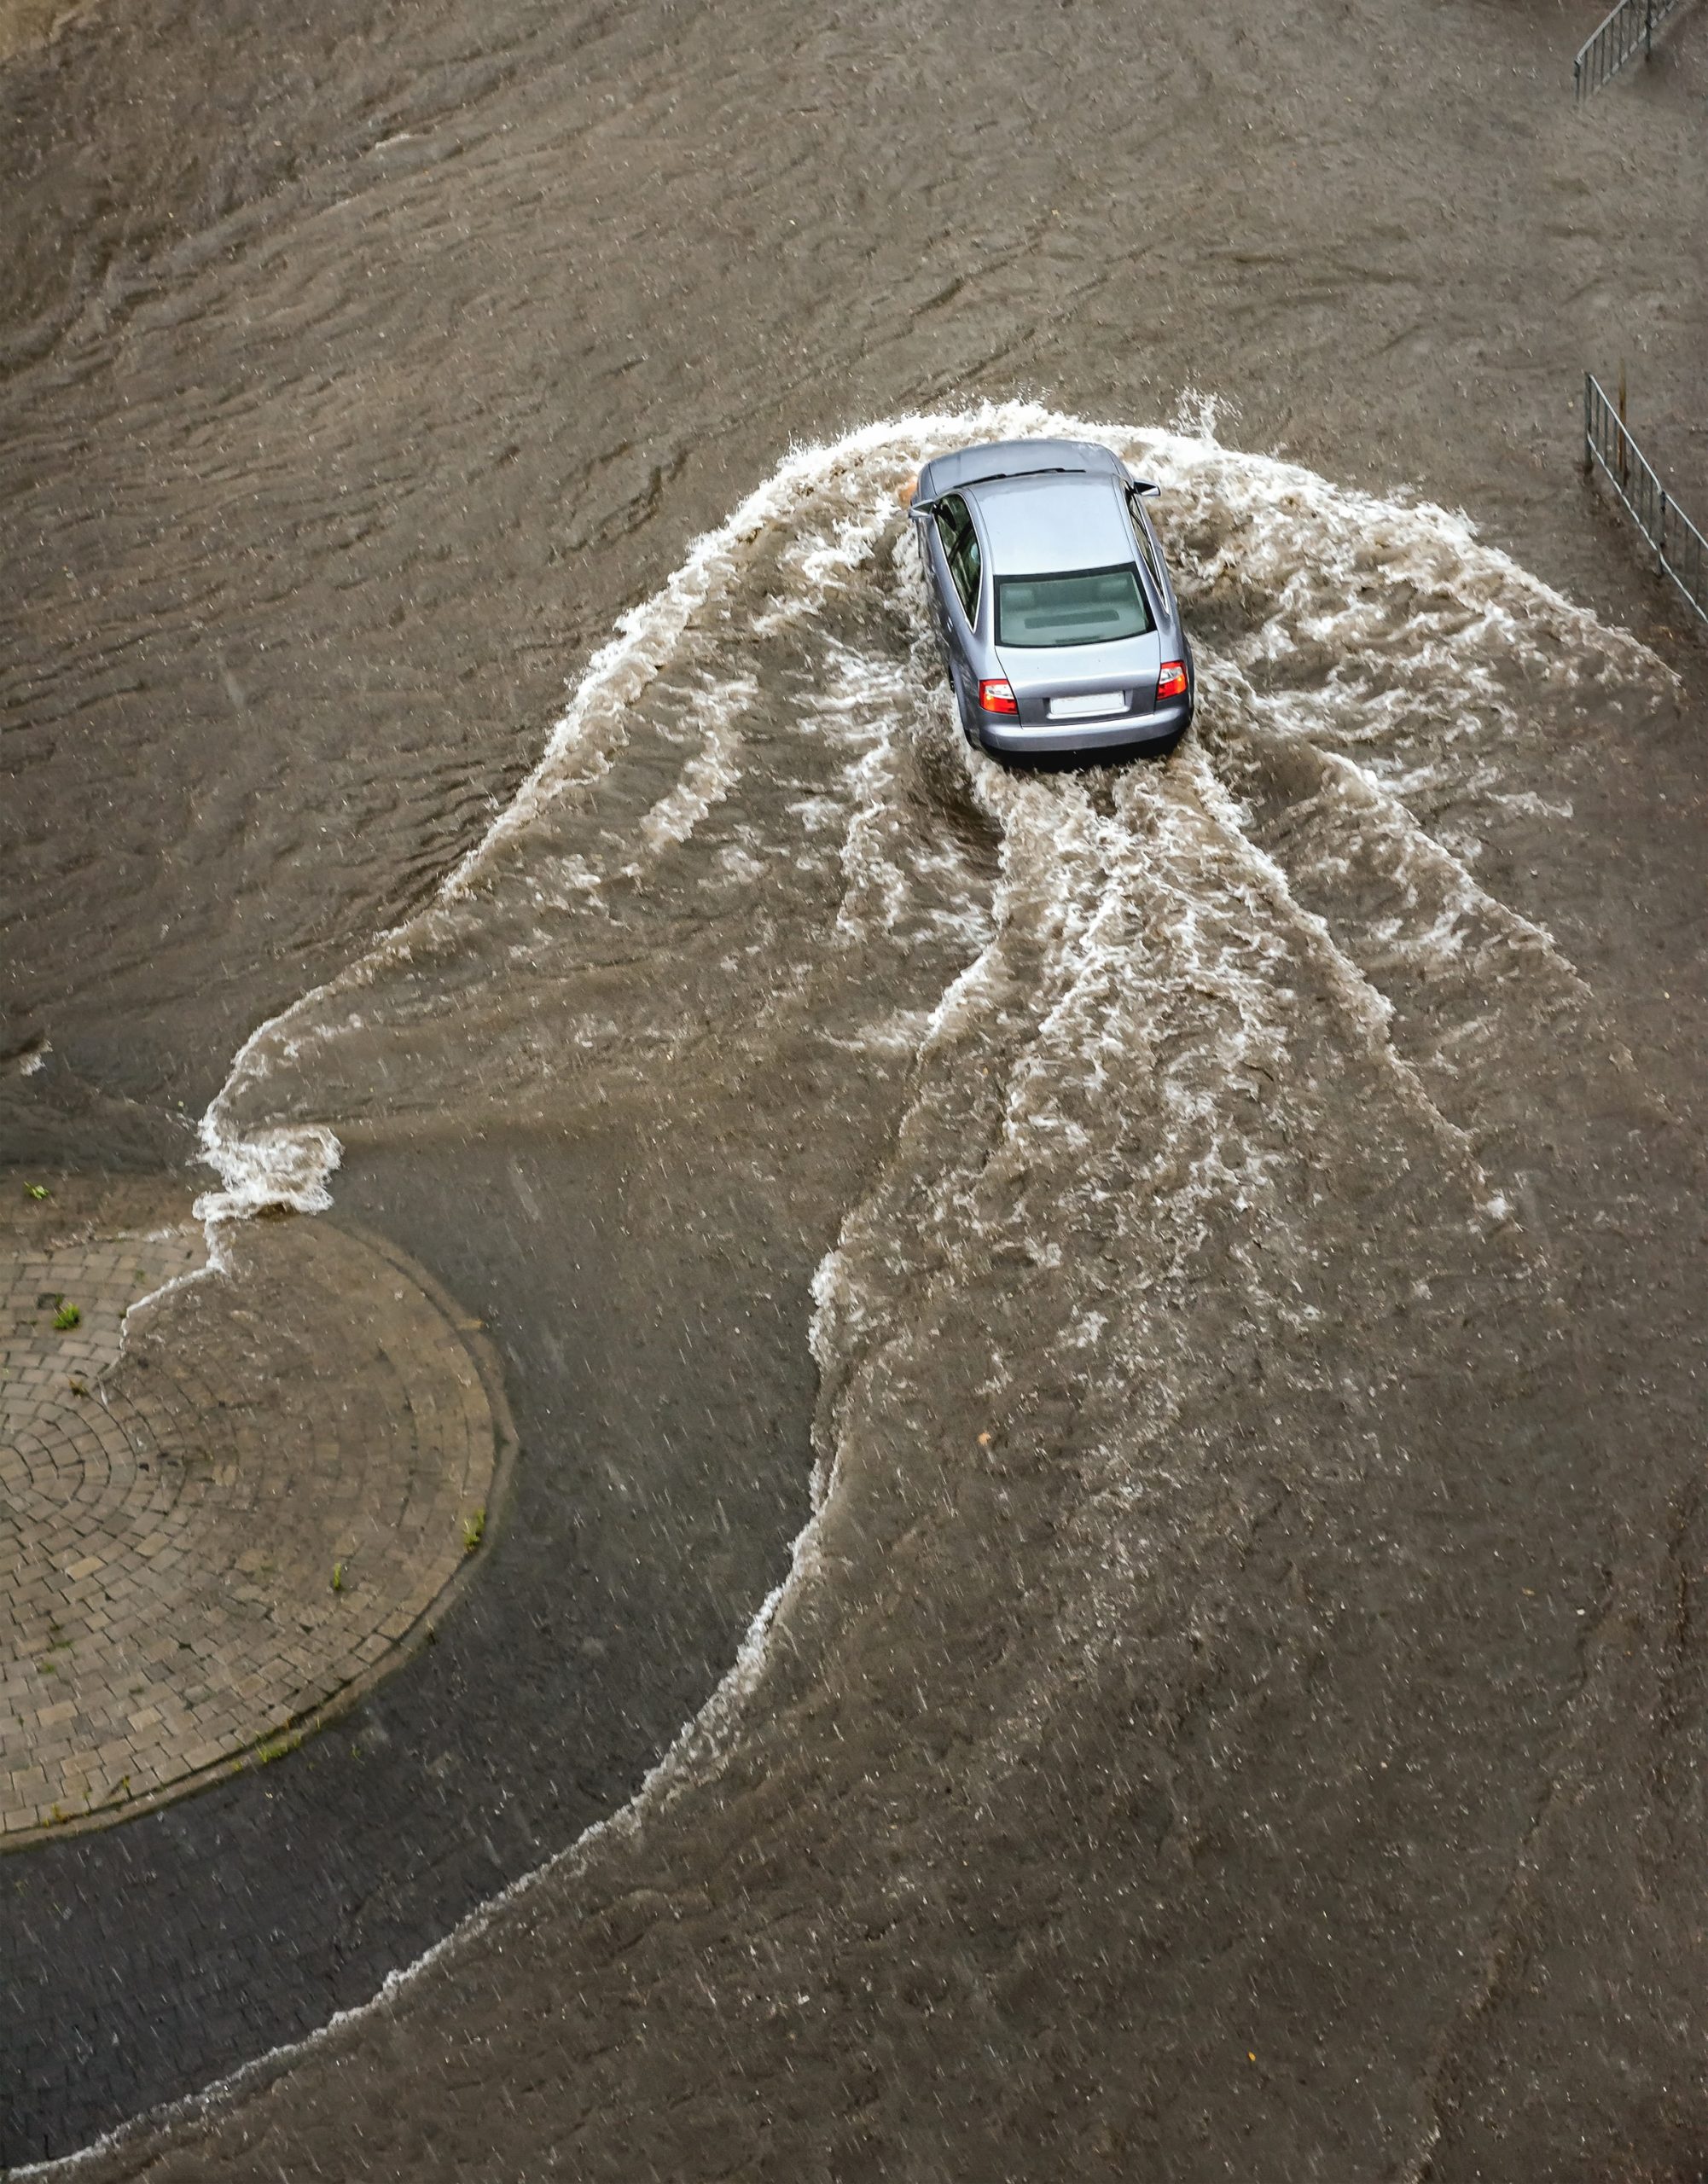 Car driving through flooded road